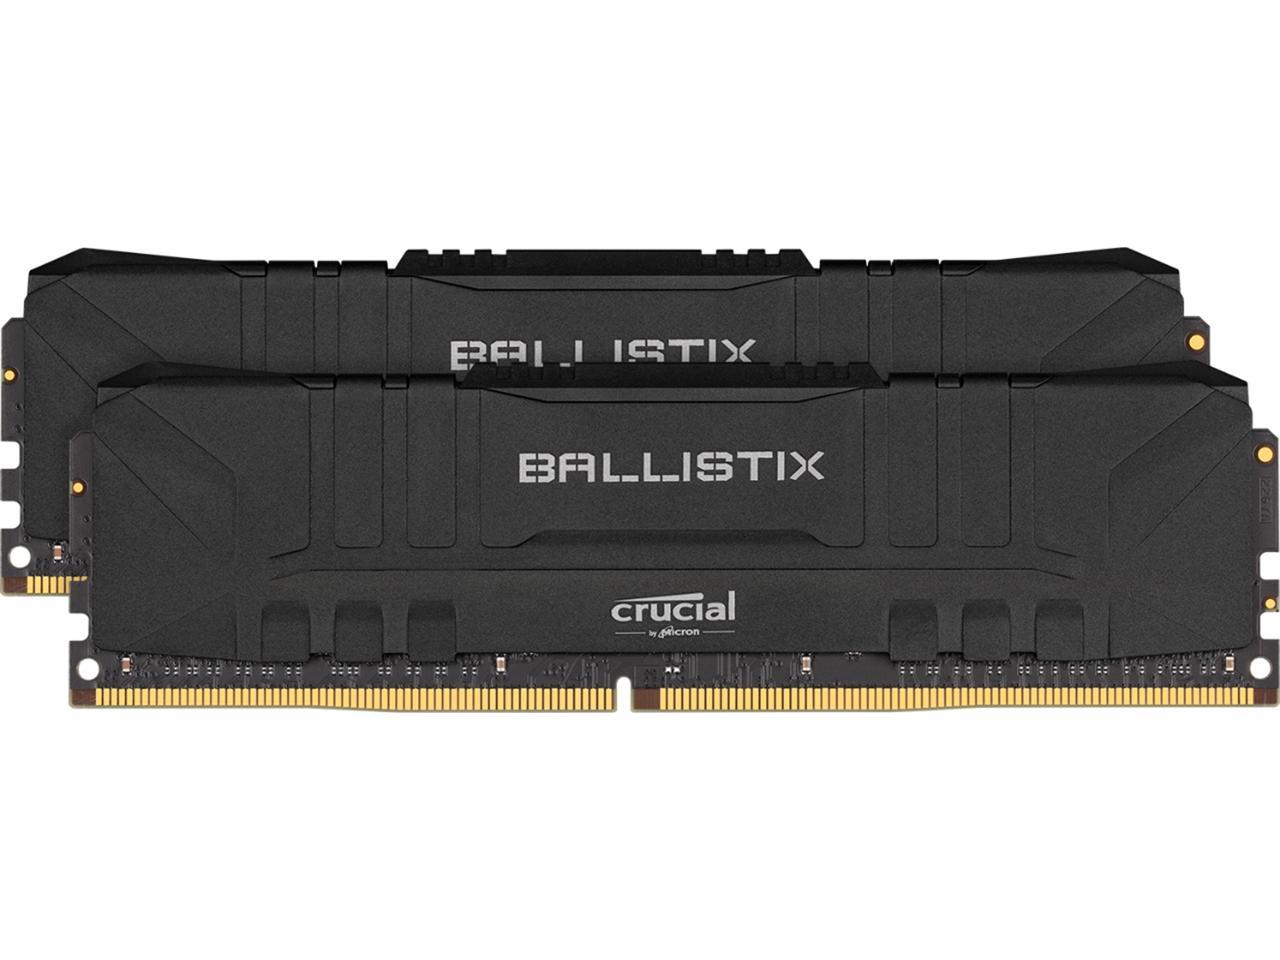 16GB (2x8GB) Crucial Ballistix DDR4 3200MHz CL16 Desktop Gaming Memory $49.99 + Free Shipping via Newegg